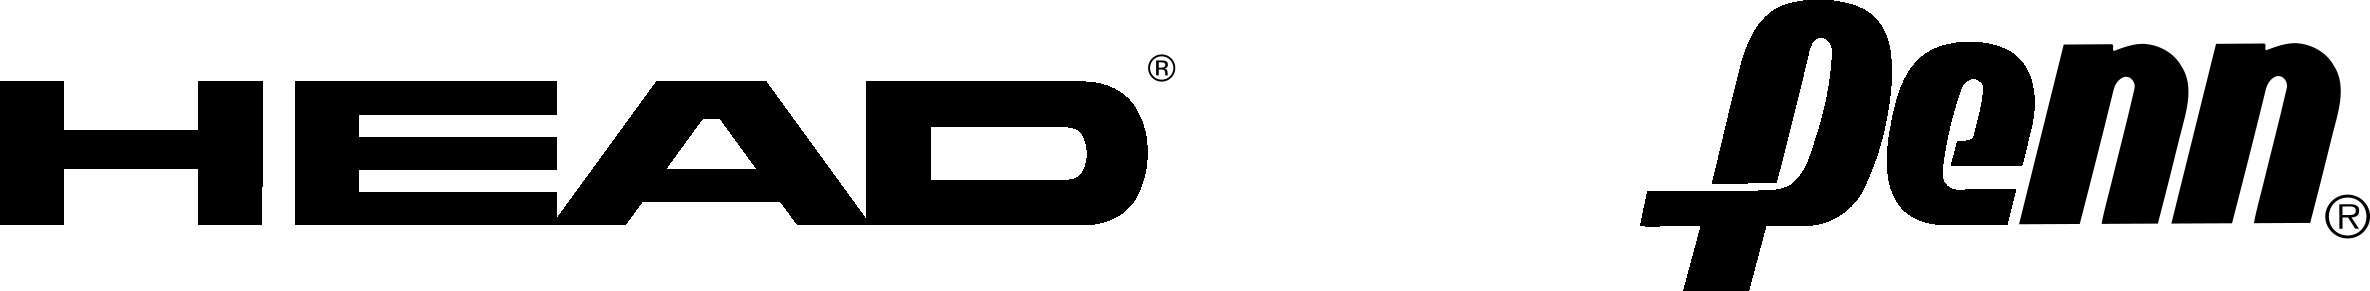 Head Penn black logo